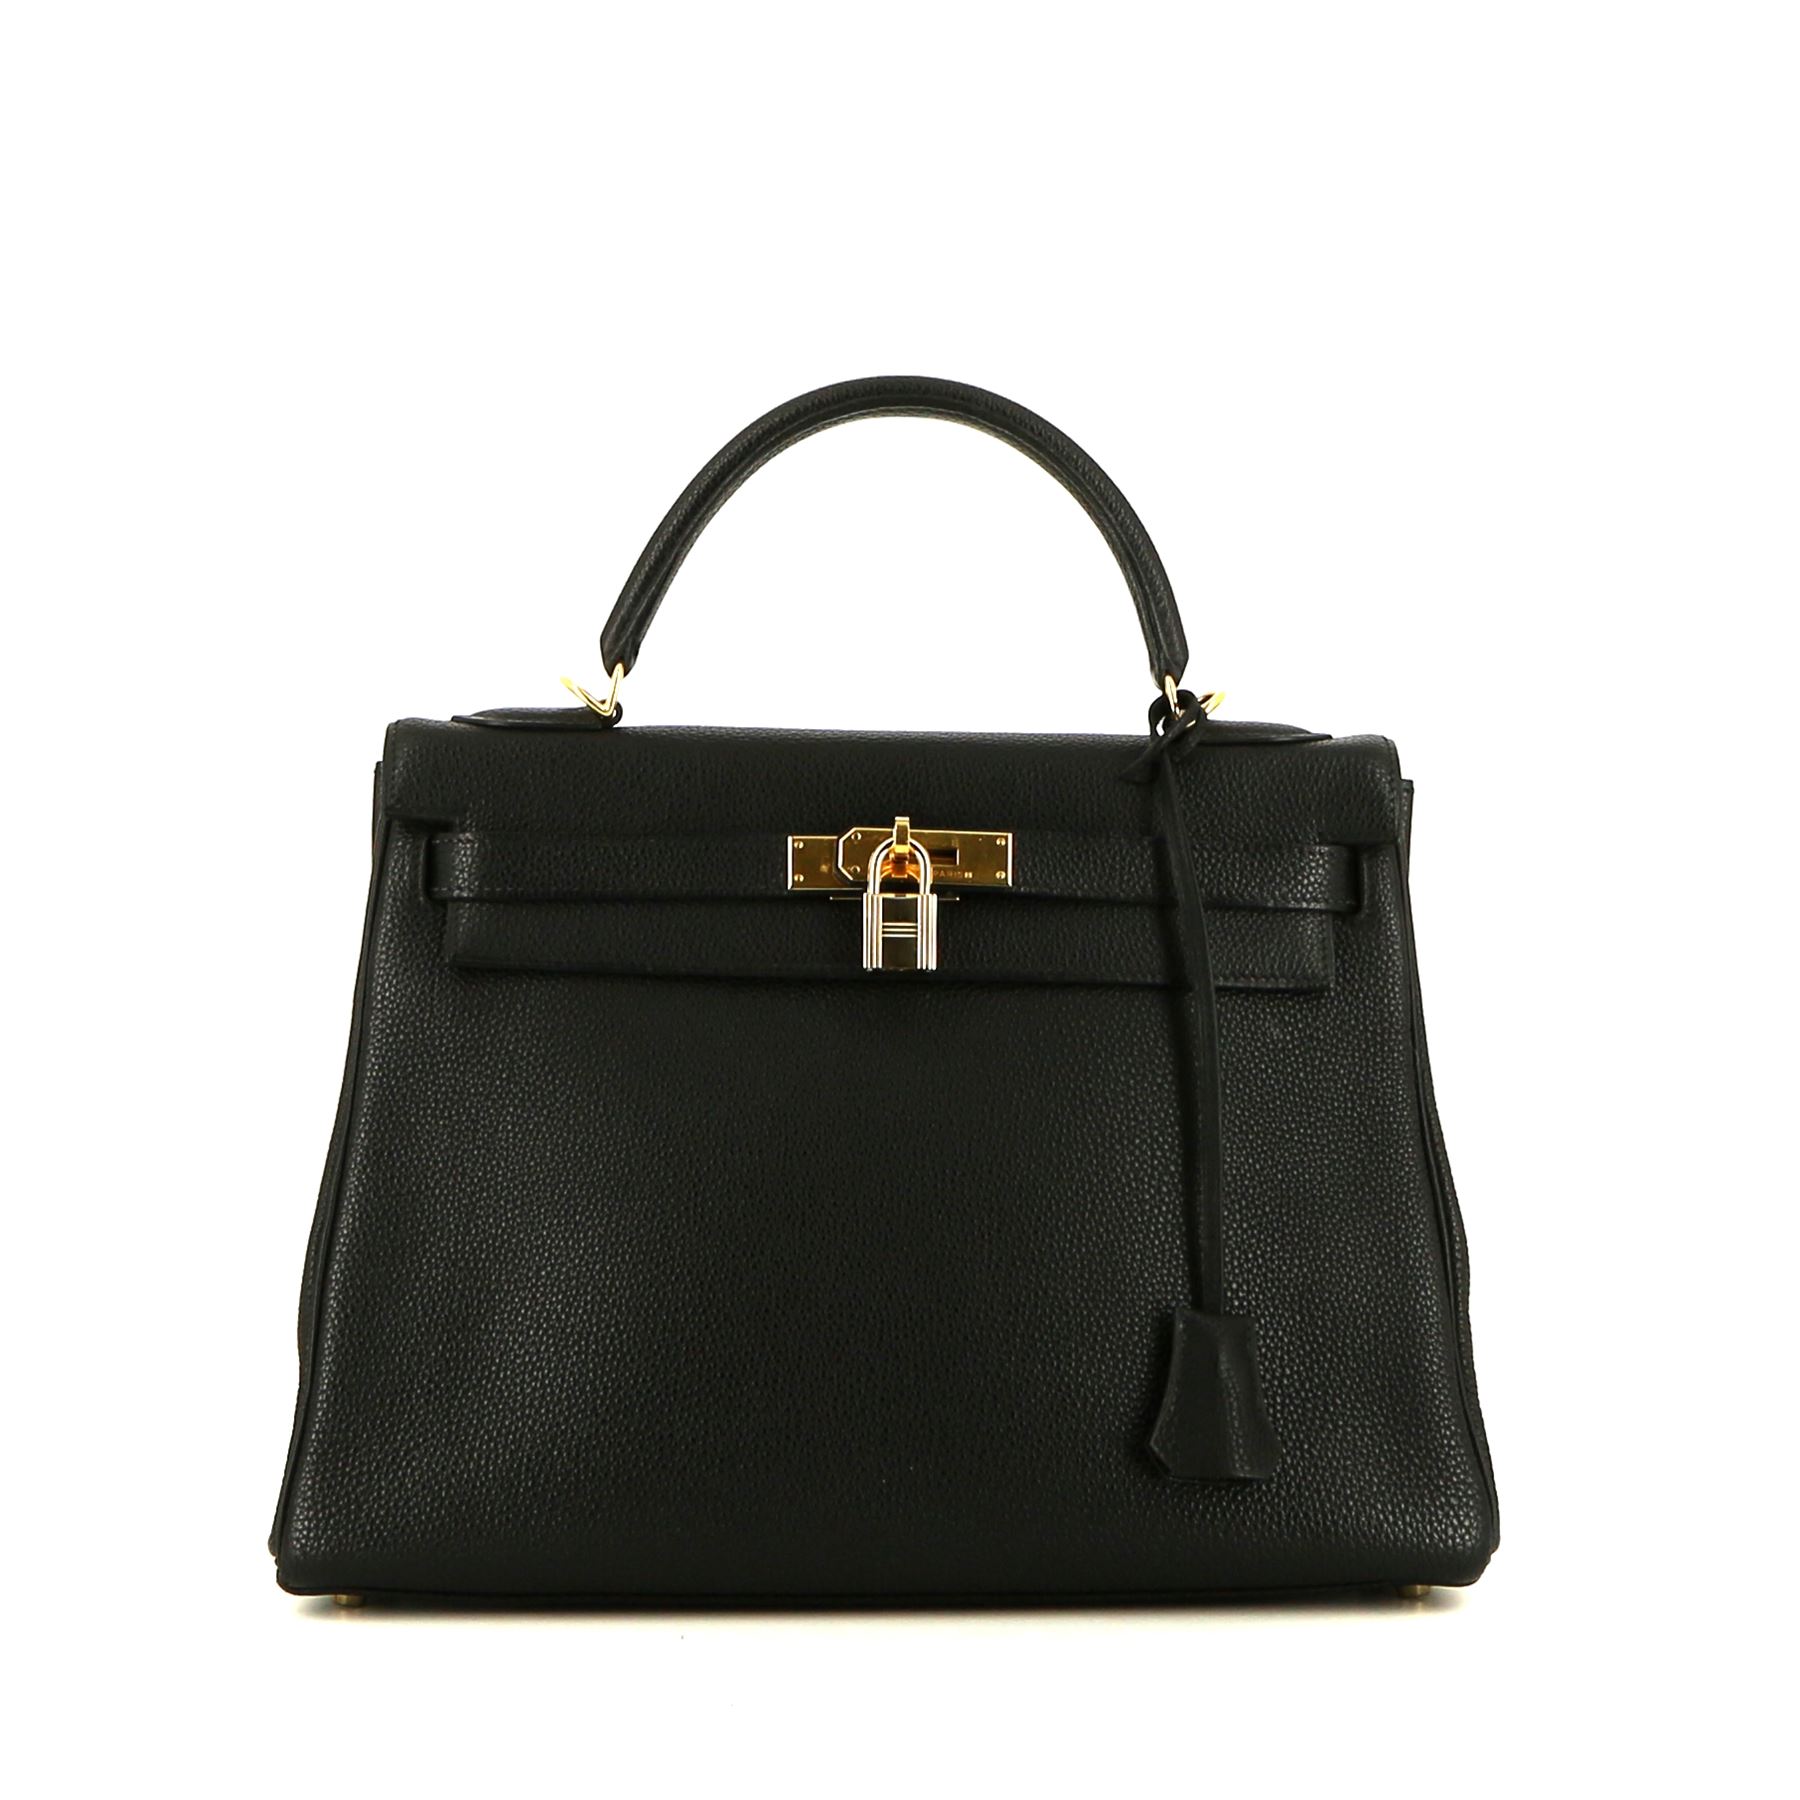 Kelly 32 cm Handbag In Black Togo Leather